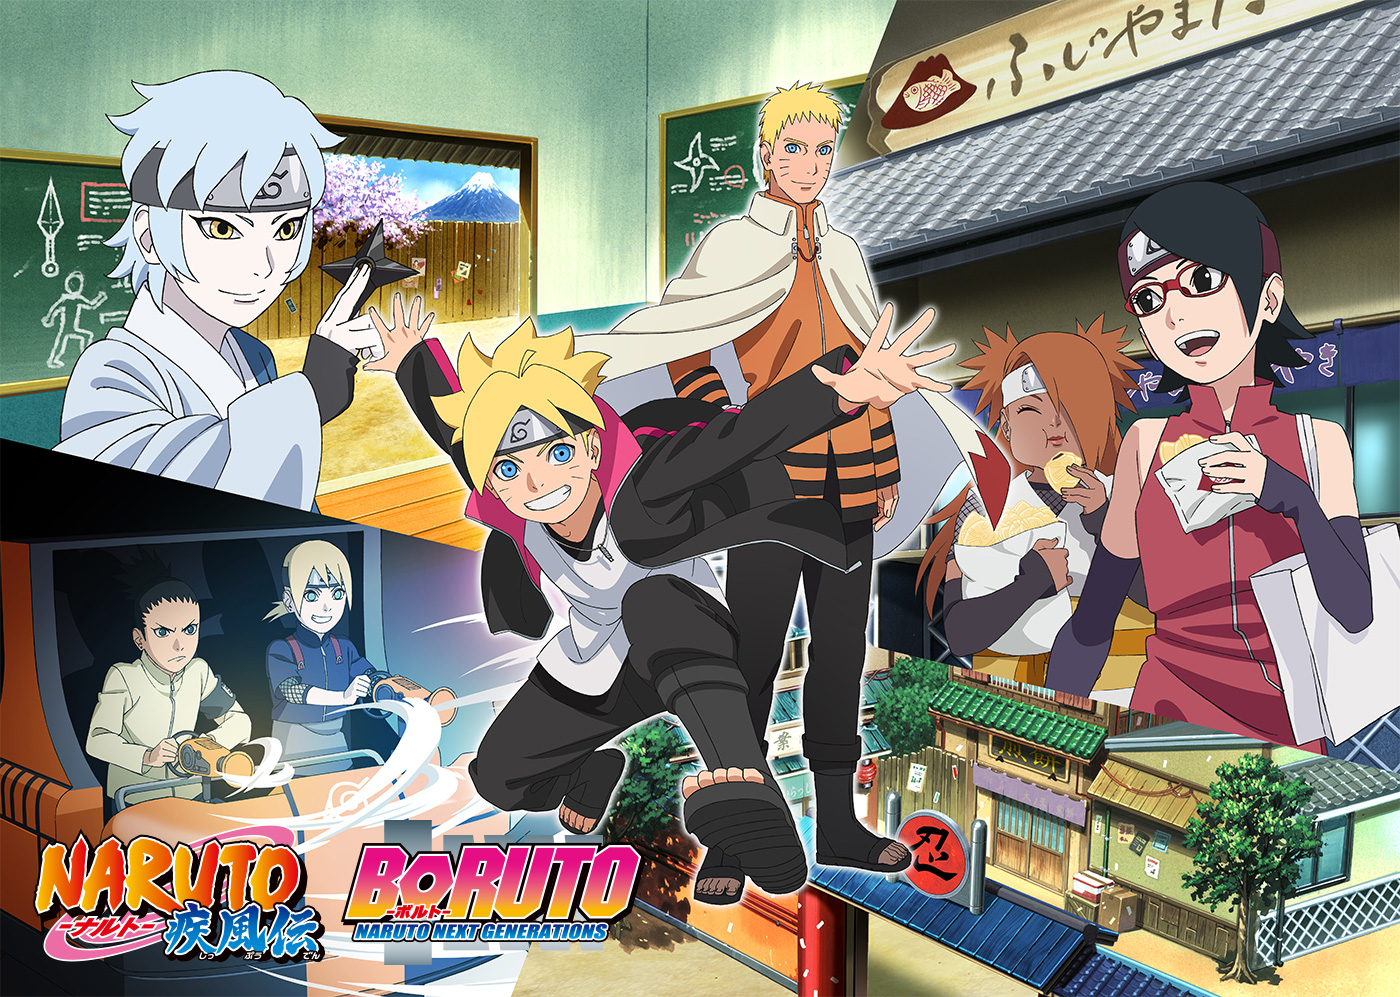 Boruto: Naruto Next Generations/Image Gallery, Jump Database